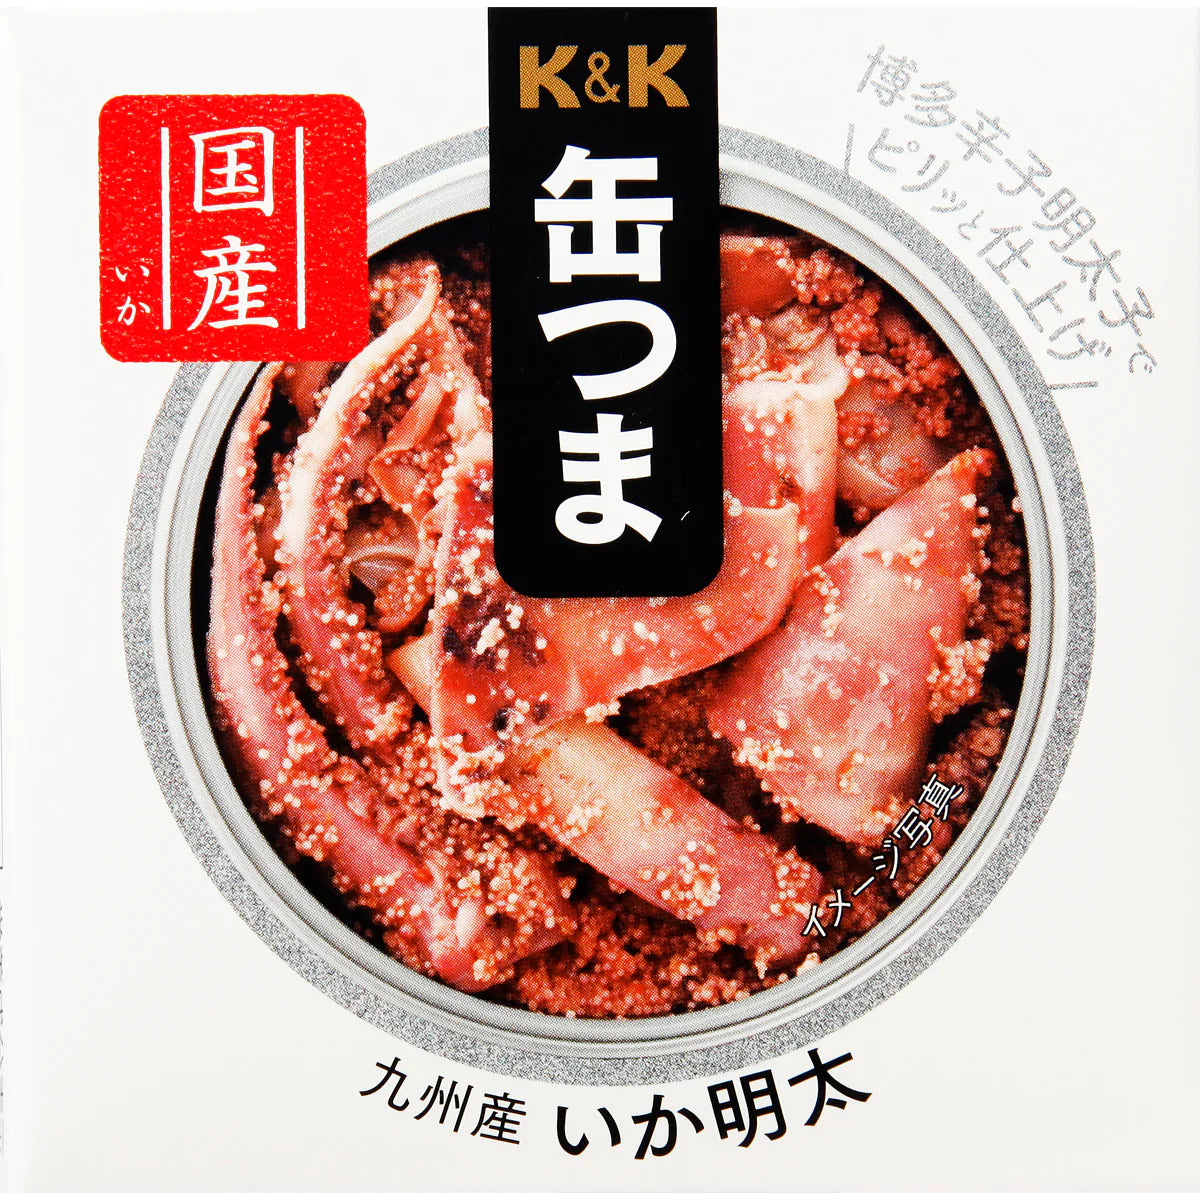 Canned　–　Preserved　Food　Ja　StudioTokyo　Squid　Mentai　Roe　Egg　KANTSUMA　Snack　Cod　Spicy